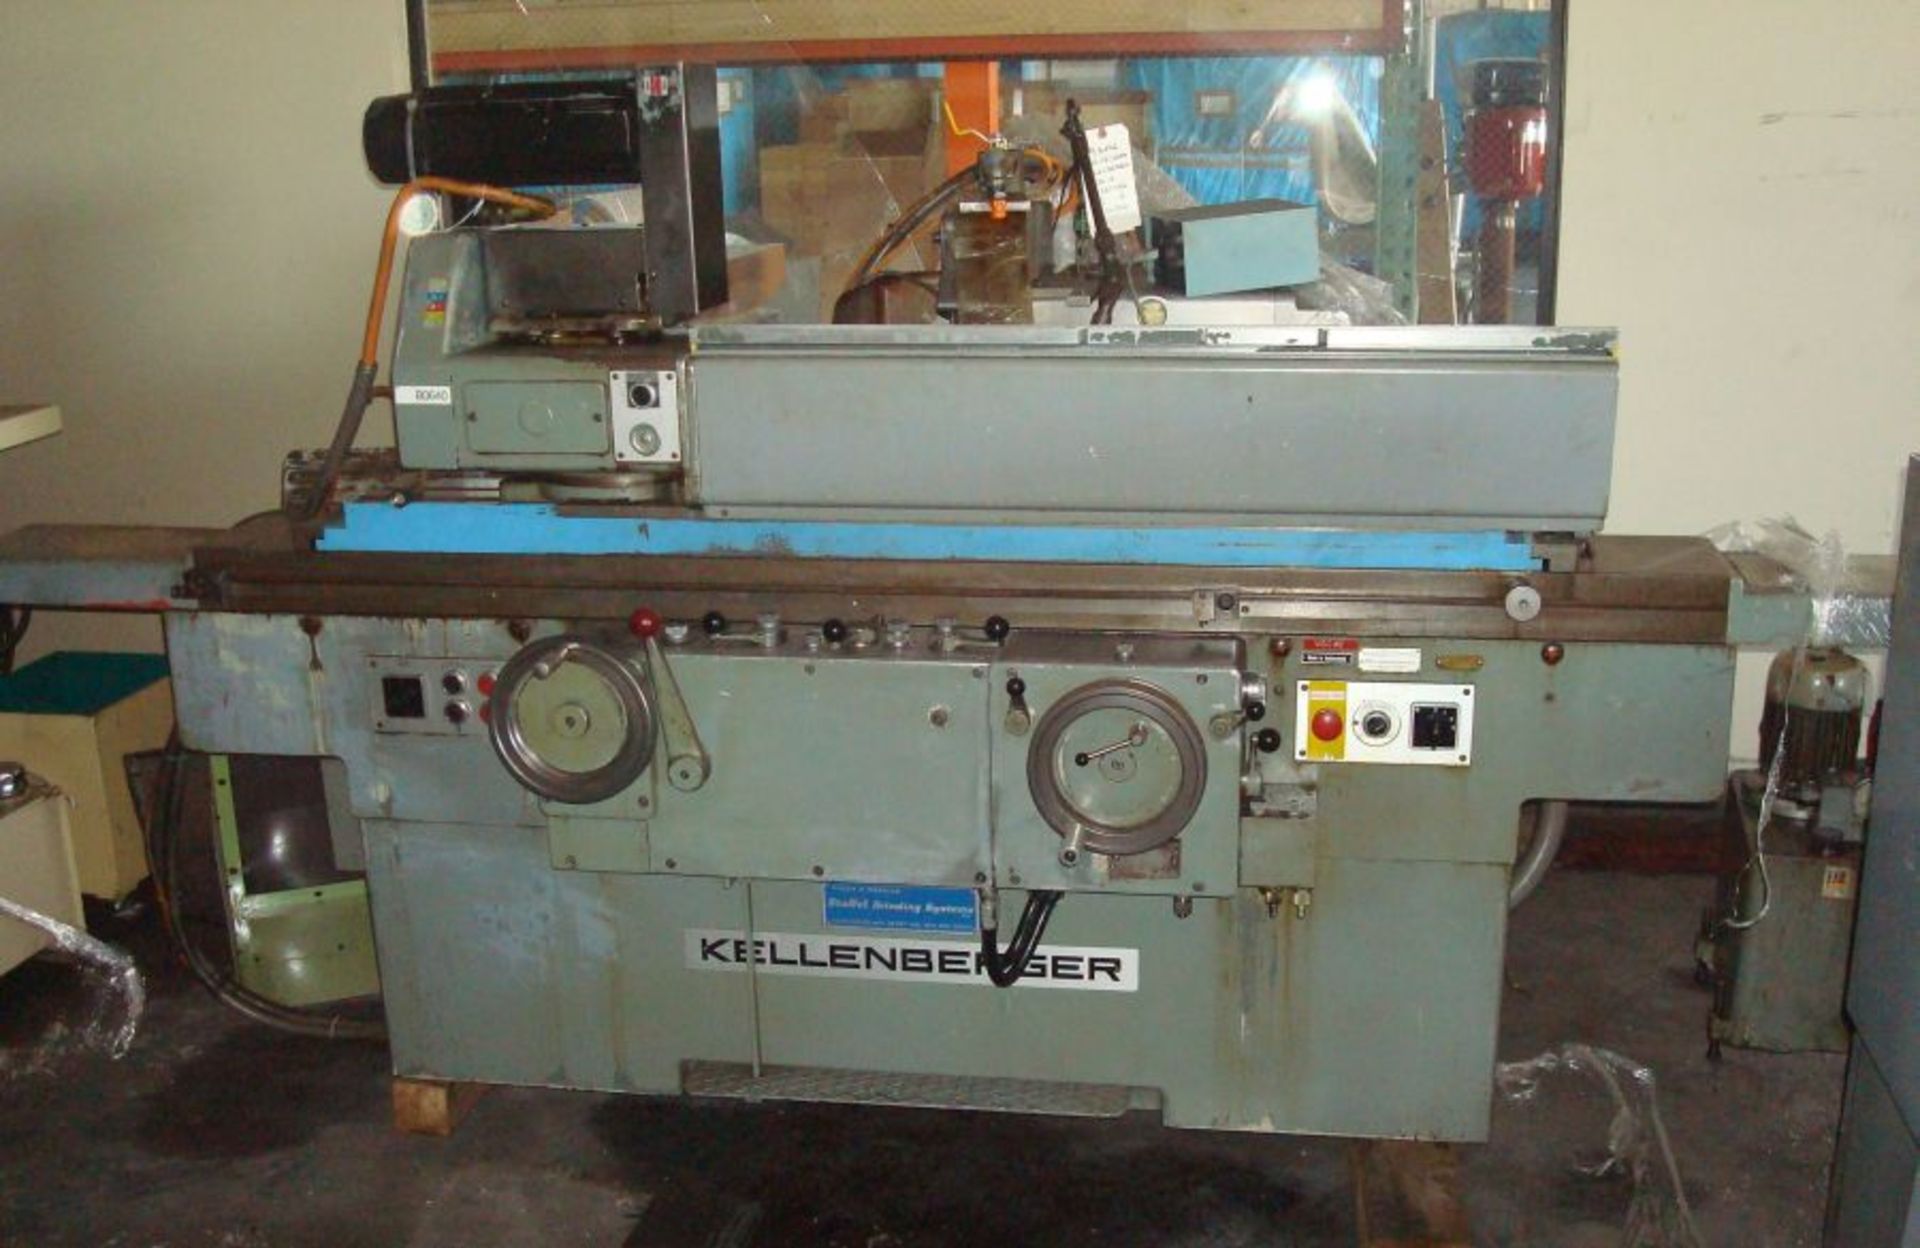 10"x40" Kellenberger 1000R cylindrical grinder, 18" x 2.4" x 8" Bore grinding wheel dimension, 1975